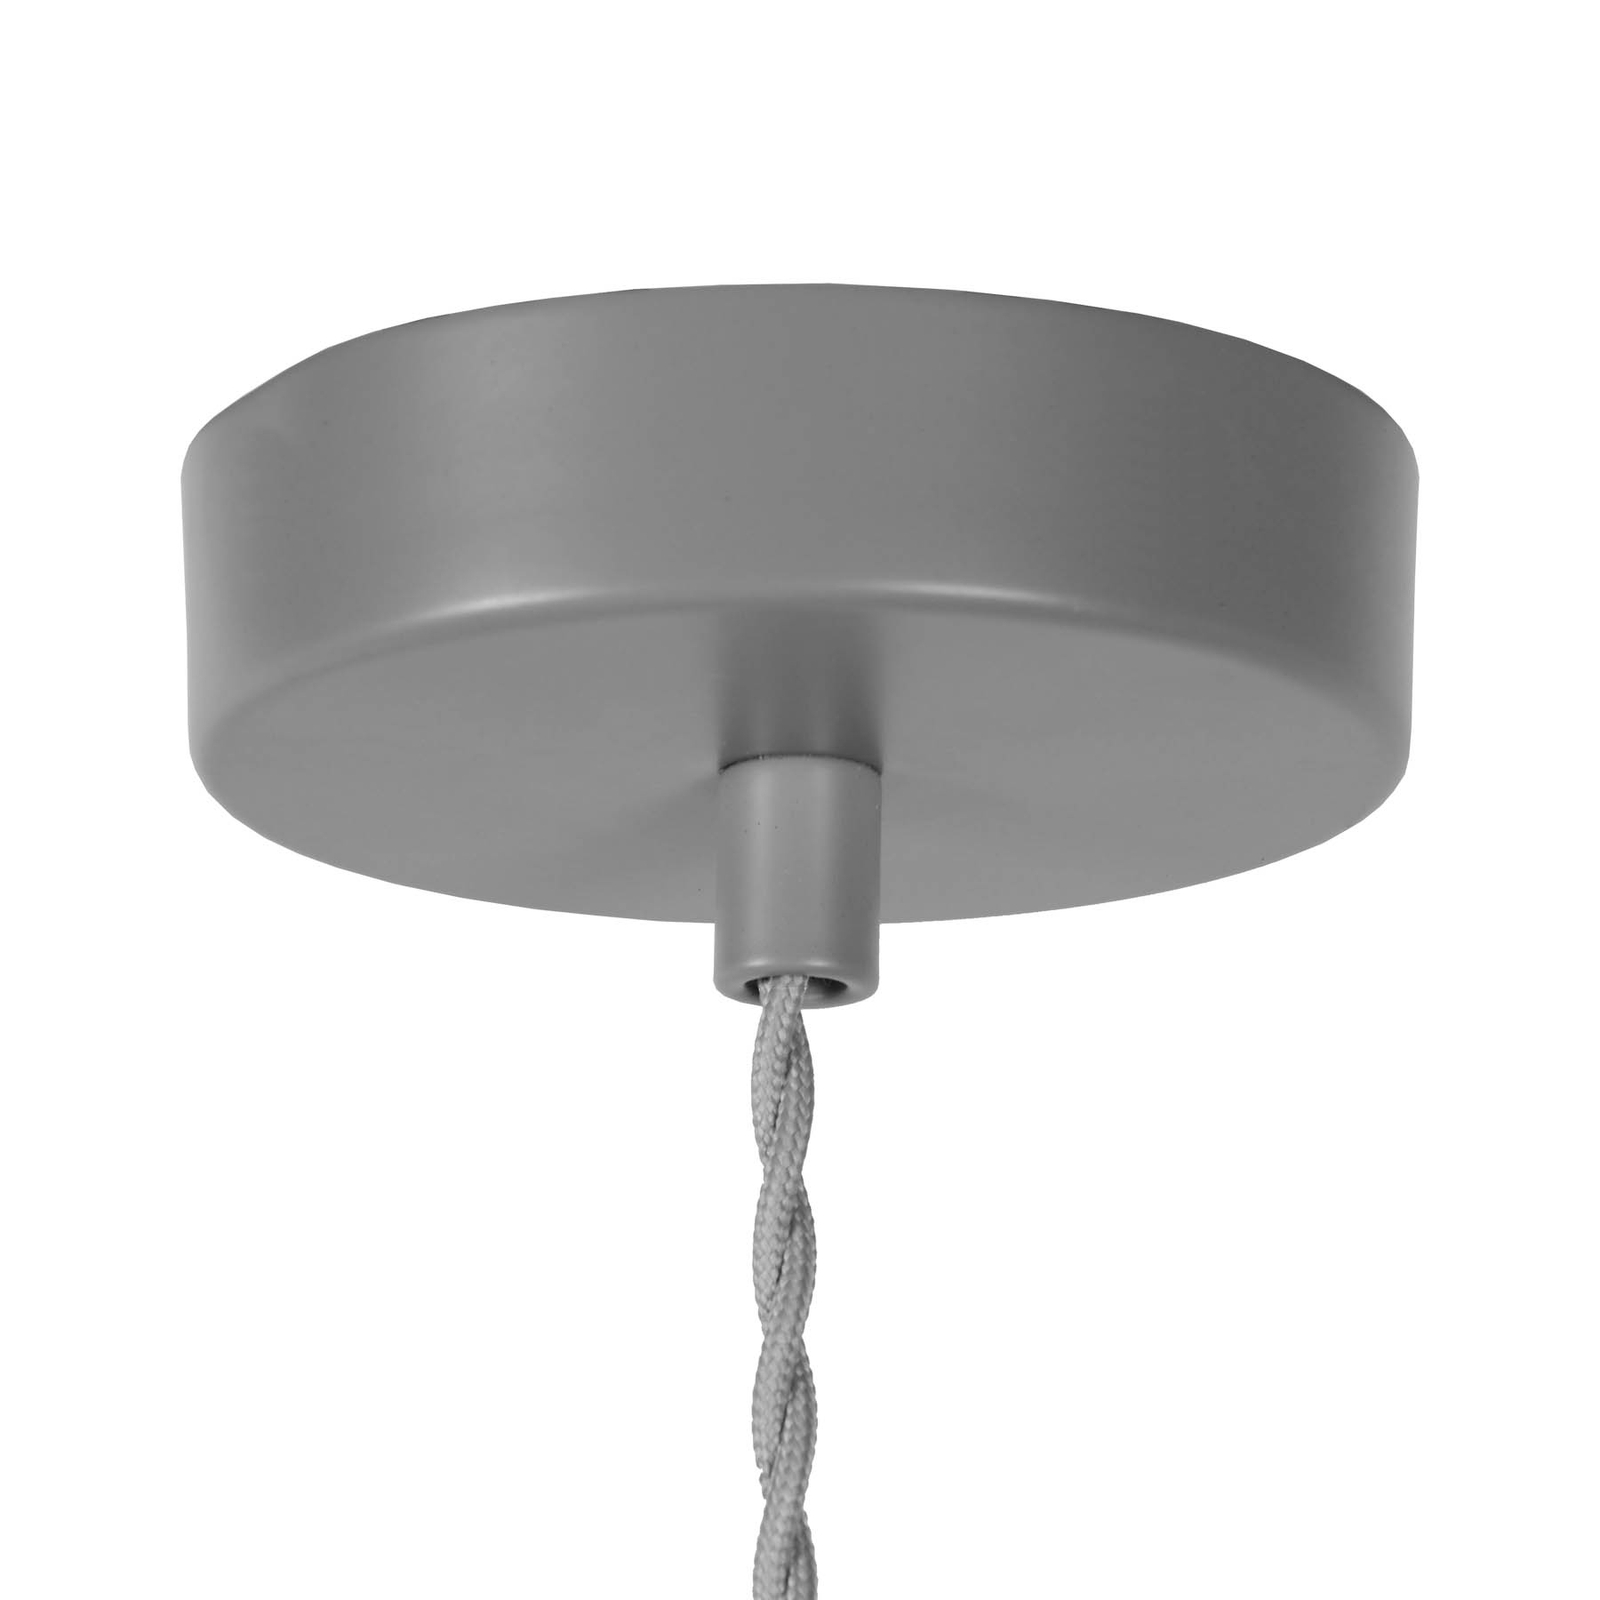 Isla metal pendant light in grey